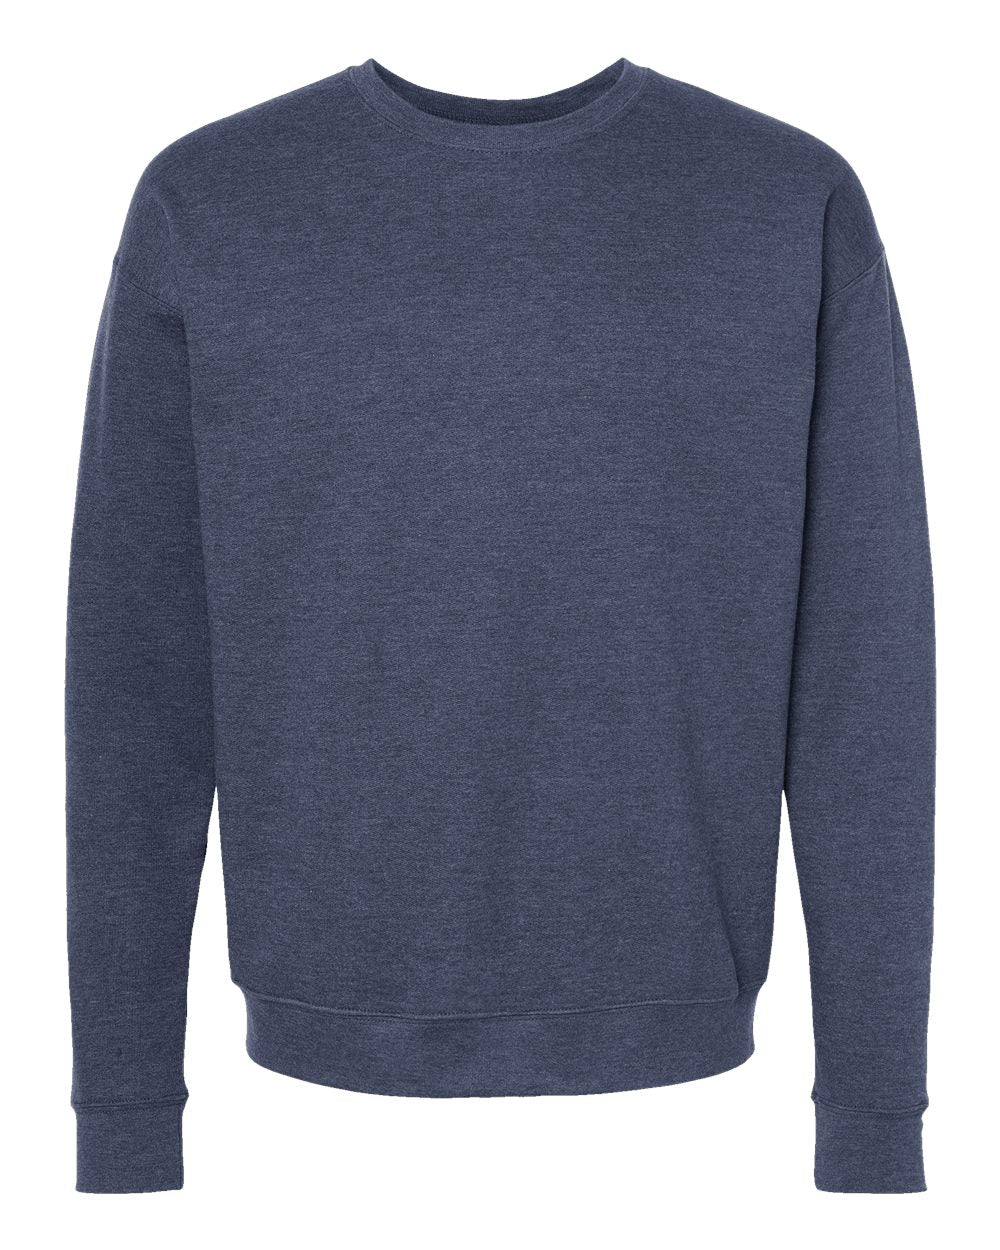 Tultex 340 Fleece Adult Sweatshirt - Heather Denim